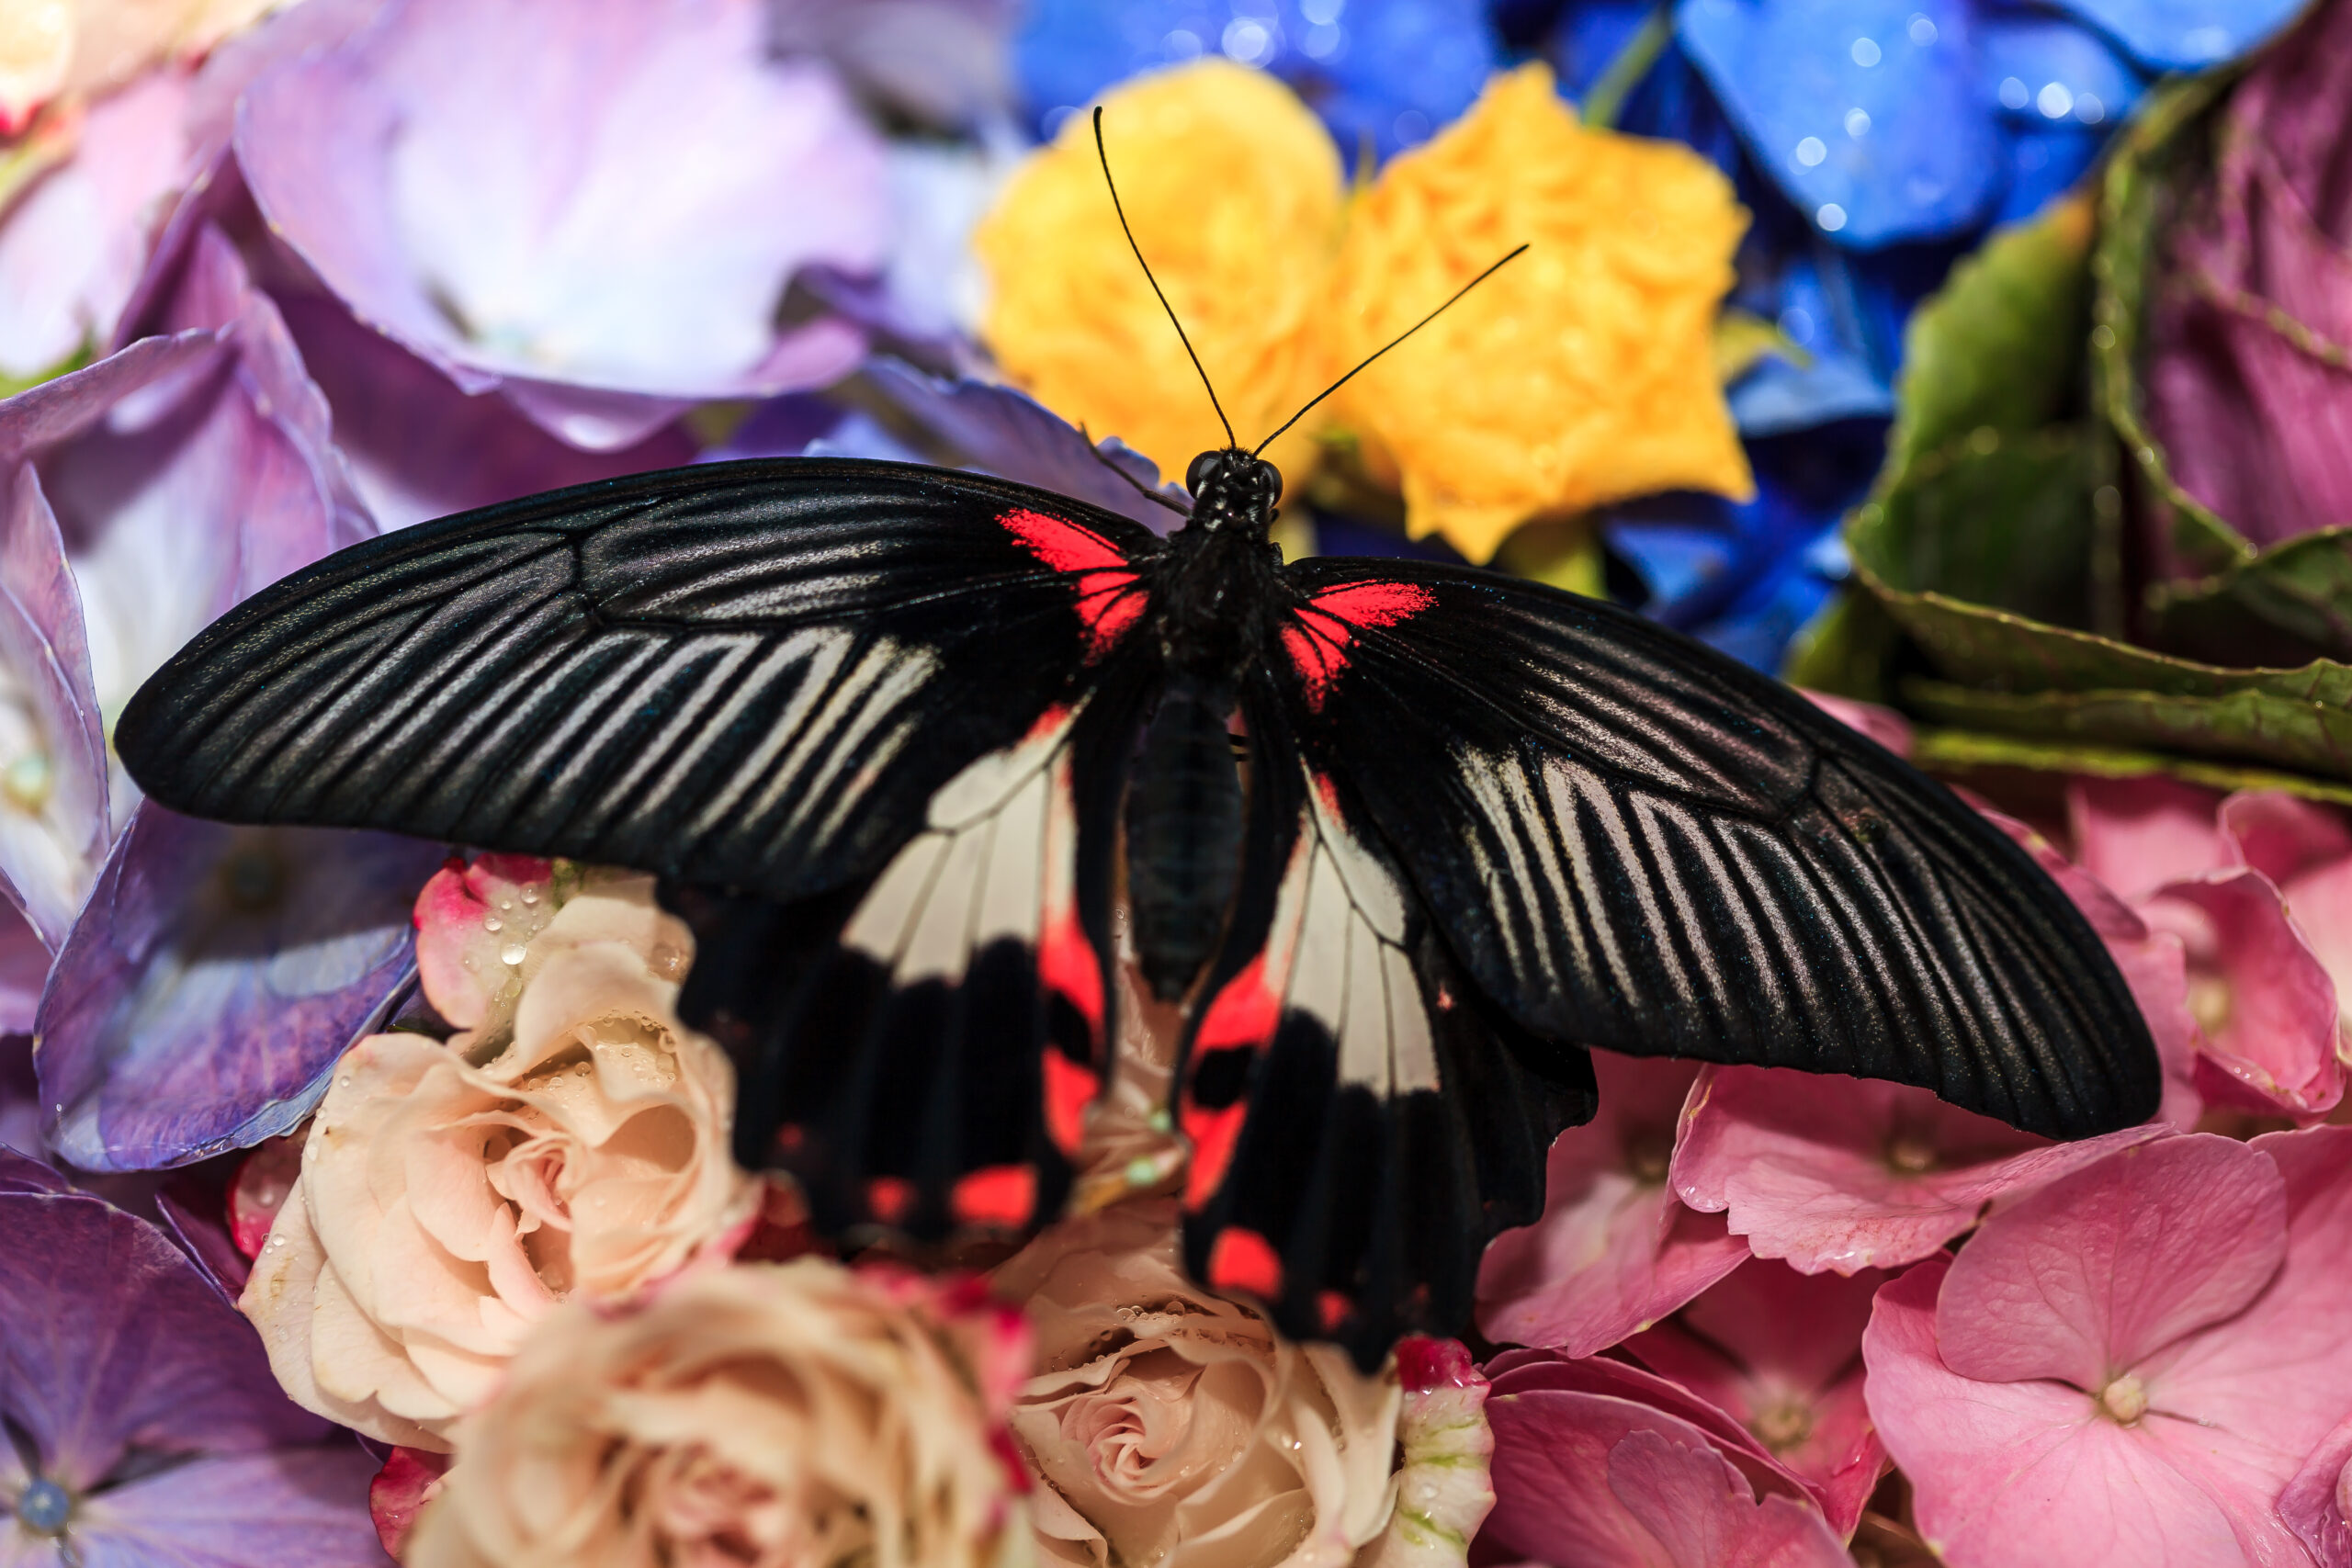 Dubai Butterfly Garden - Largest butterfly park